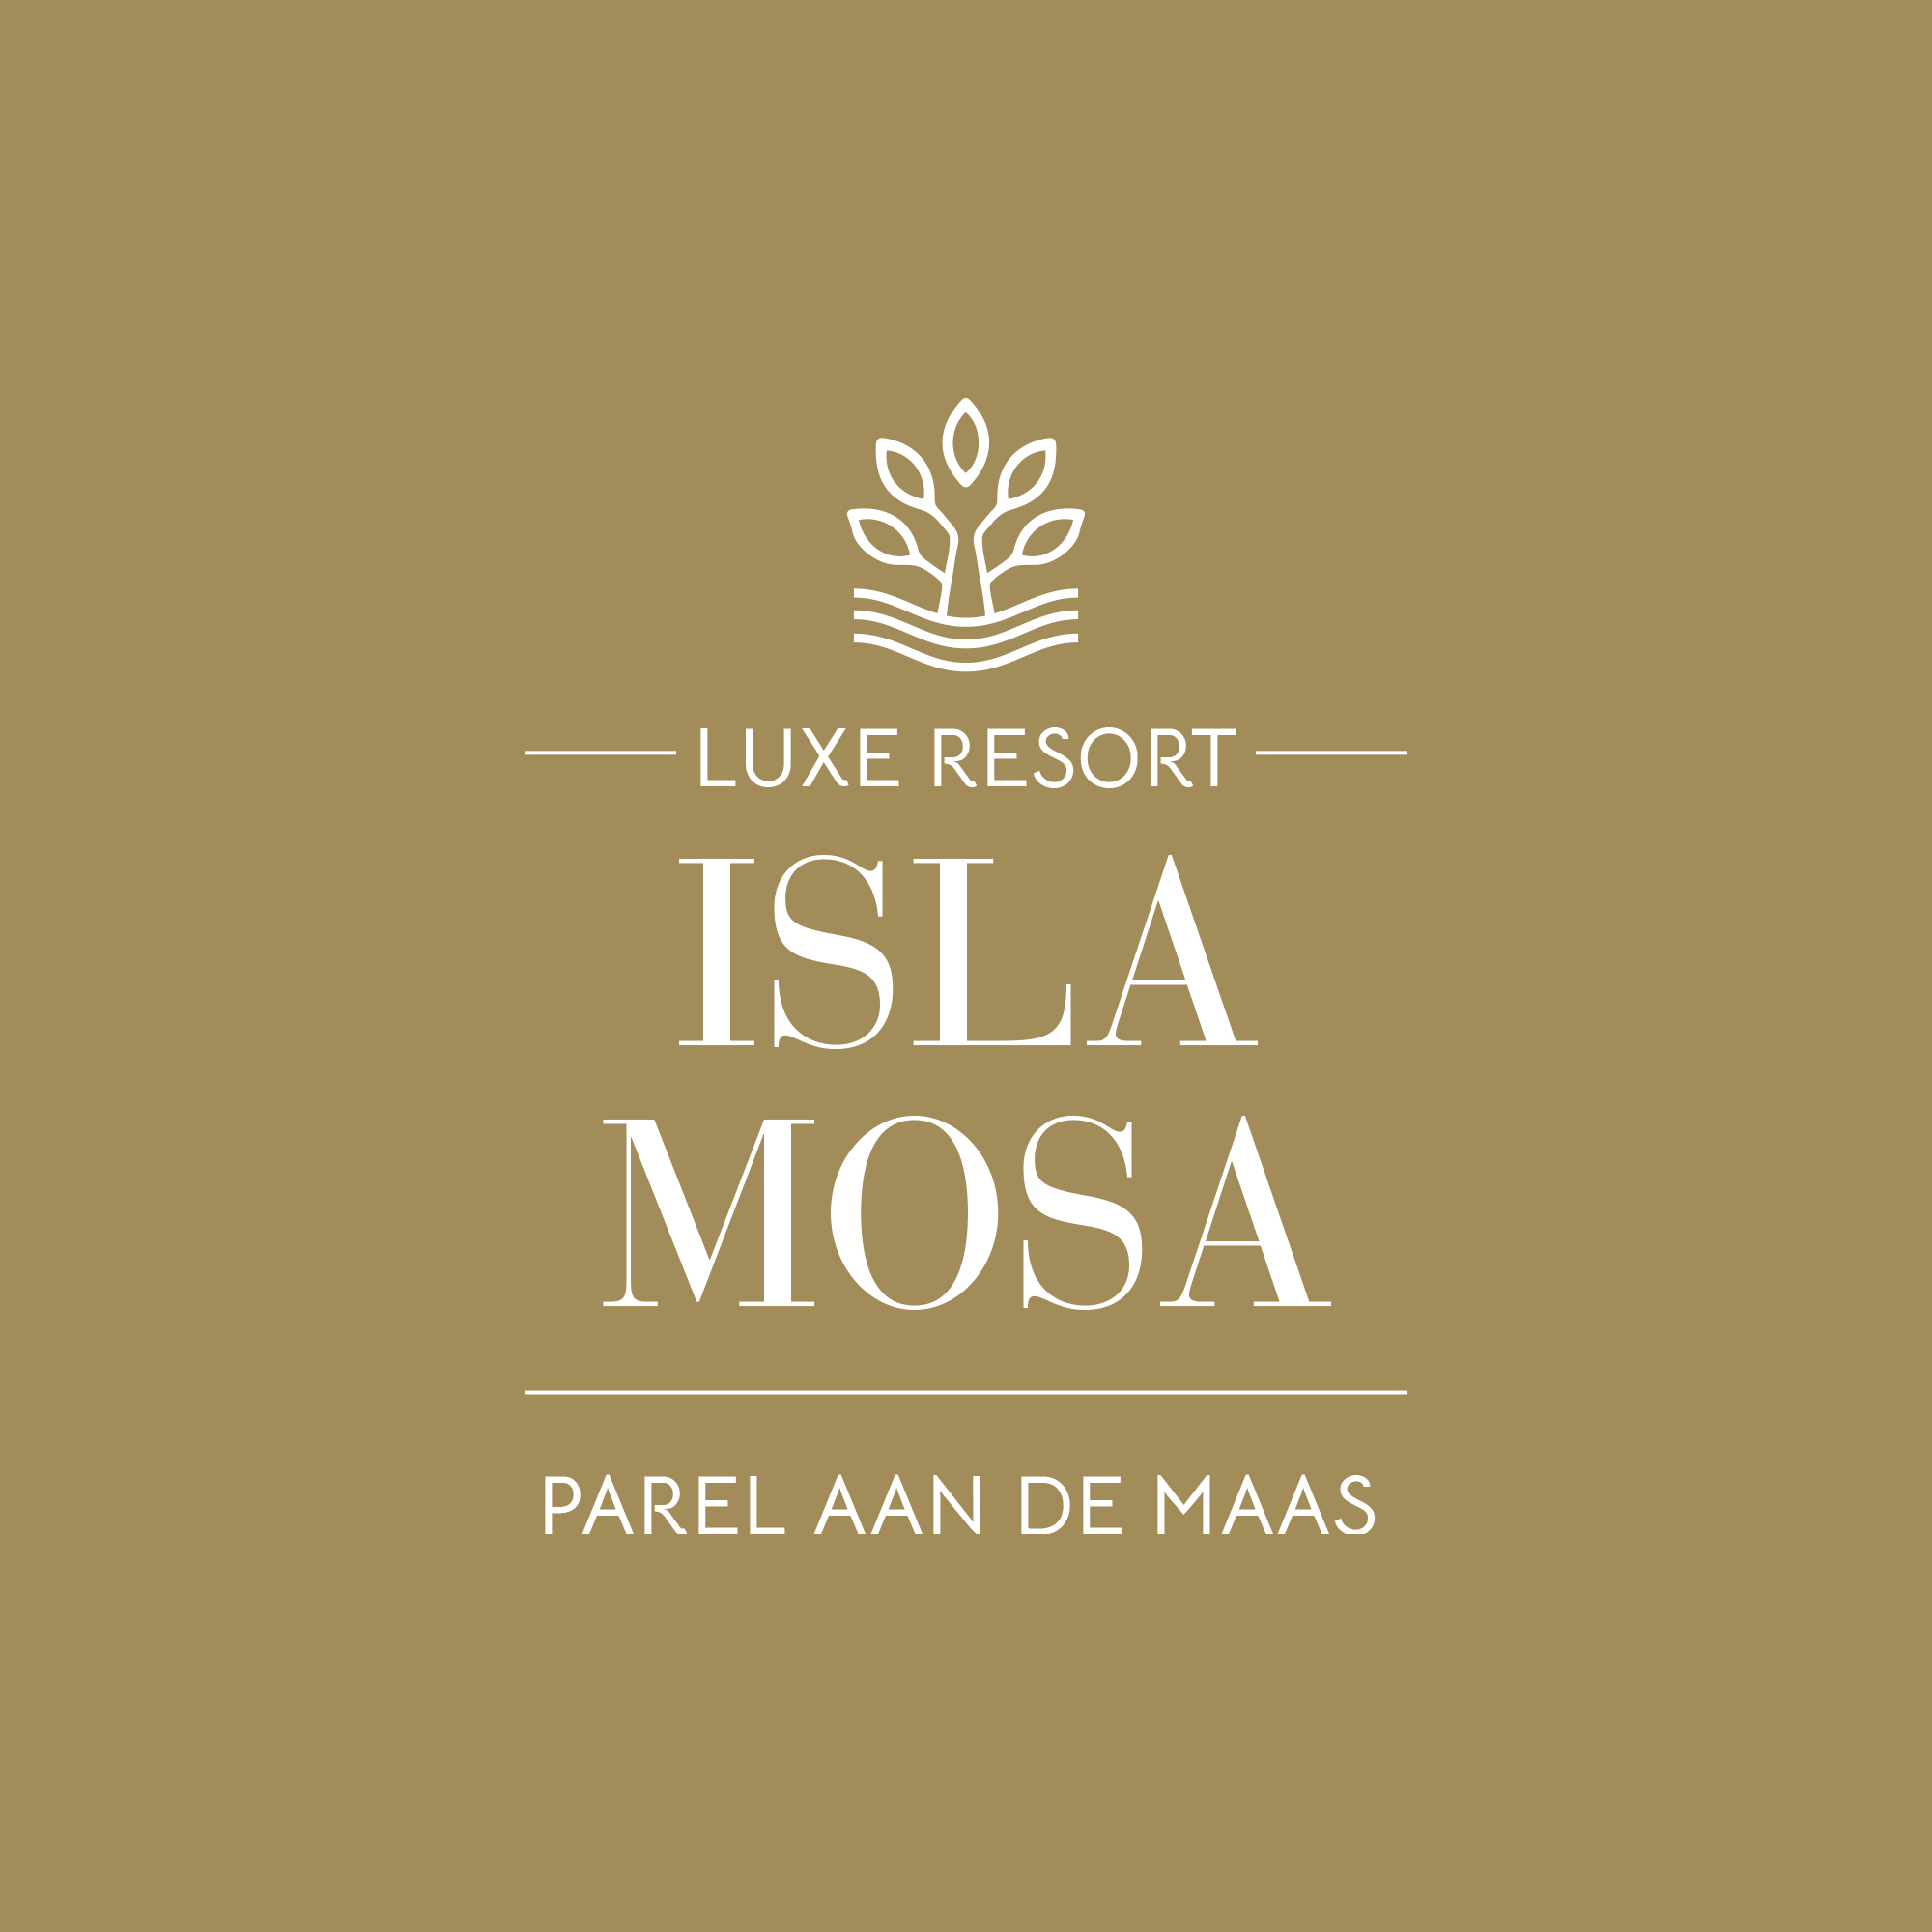 Isla Mosa logo